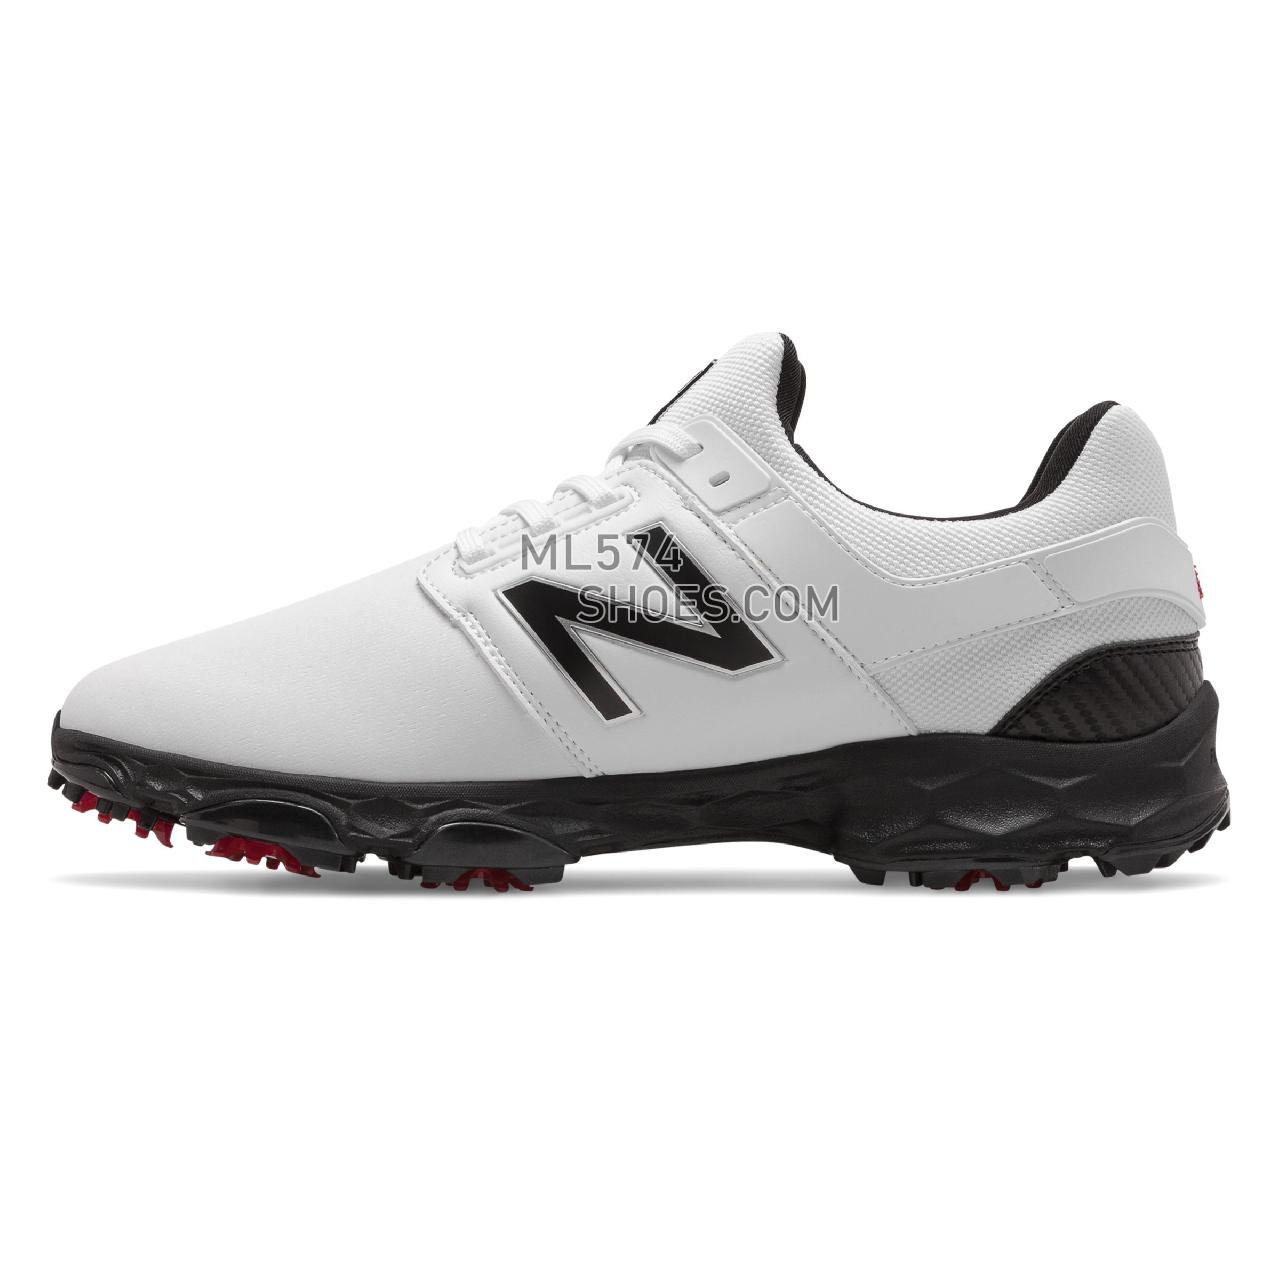 New Balance Fresh Foam LinksPro - Men's Golf - White with Black - NBG4001WK